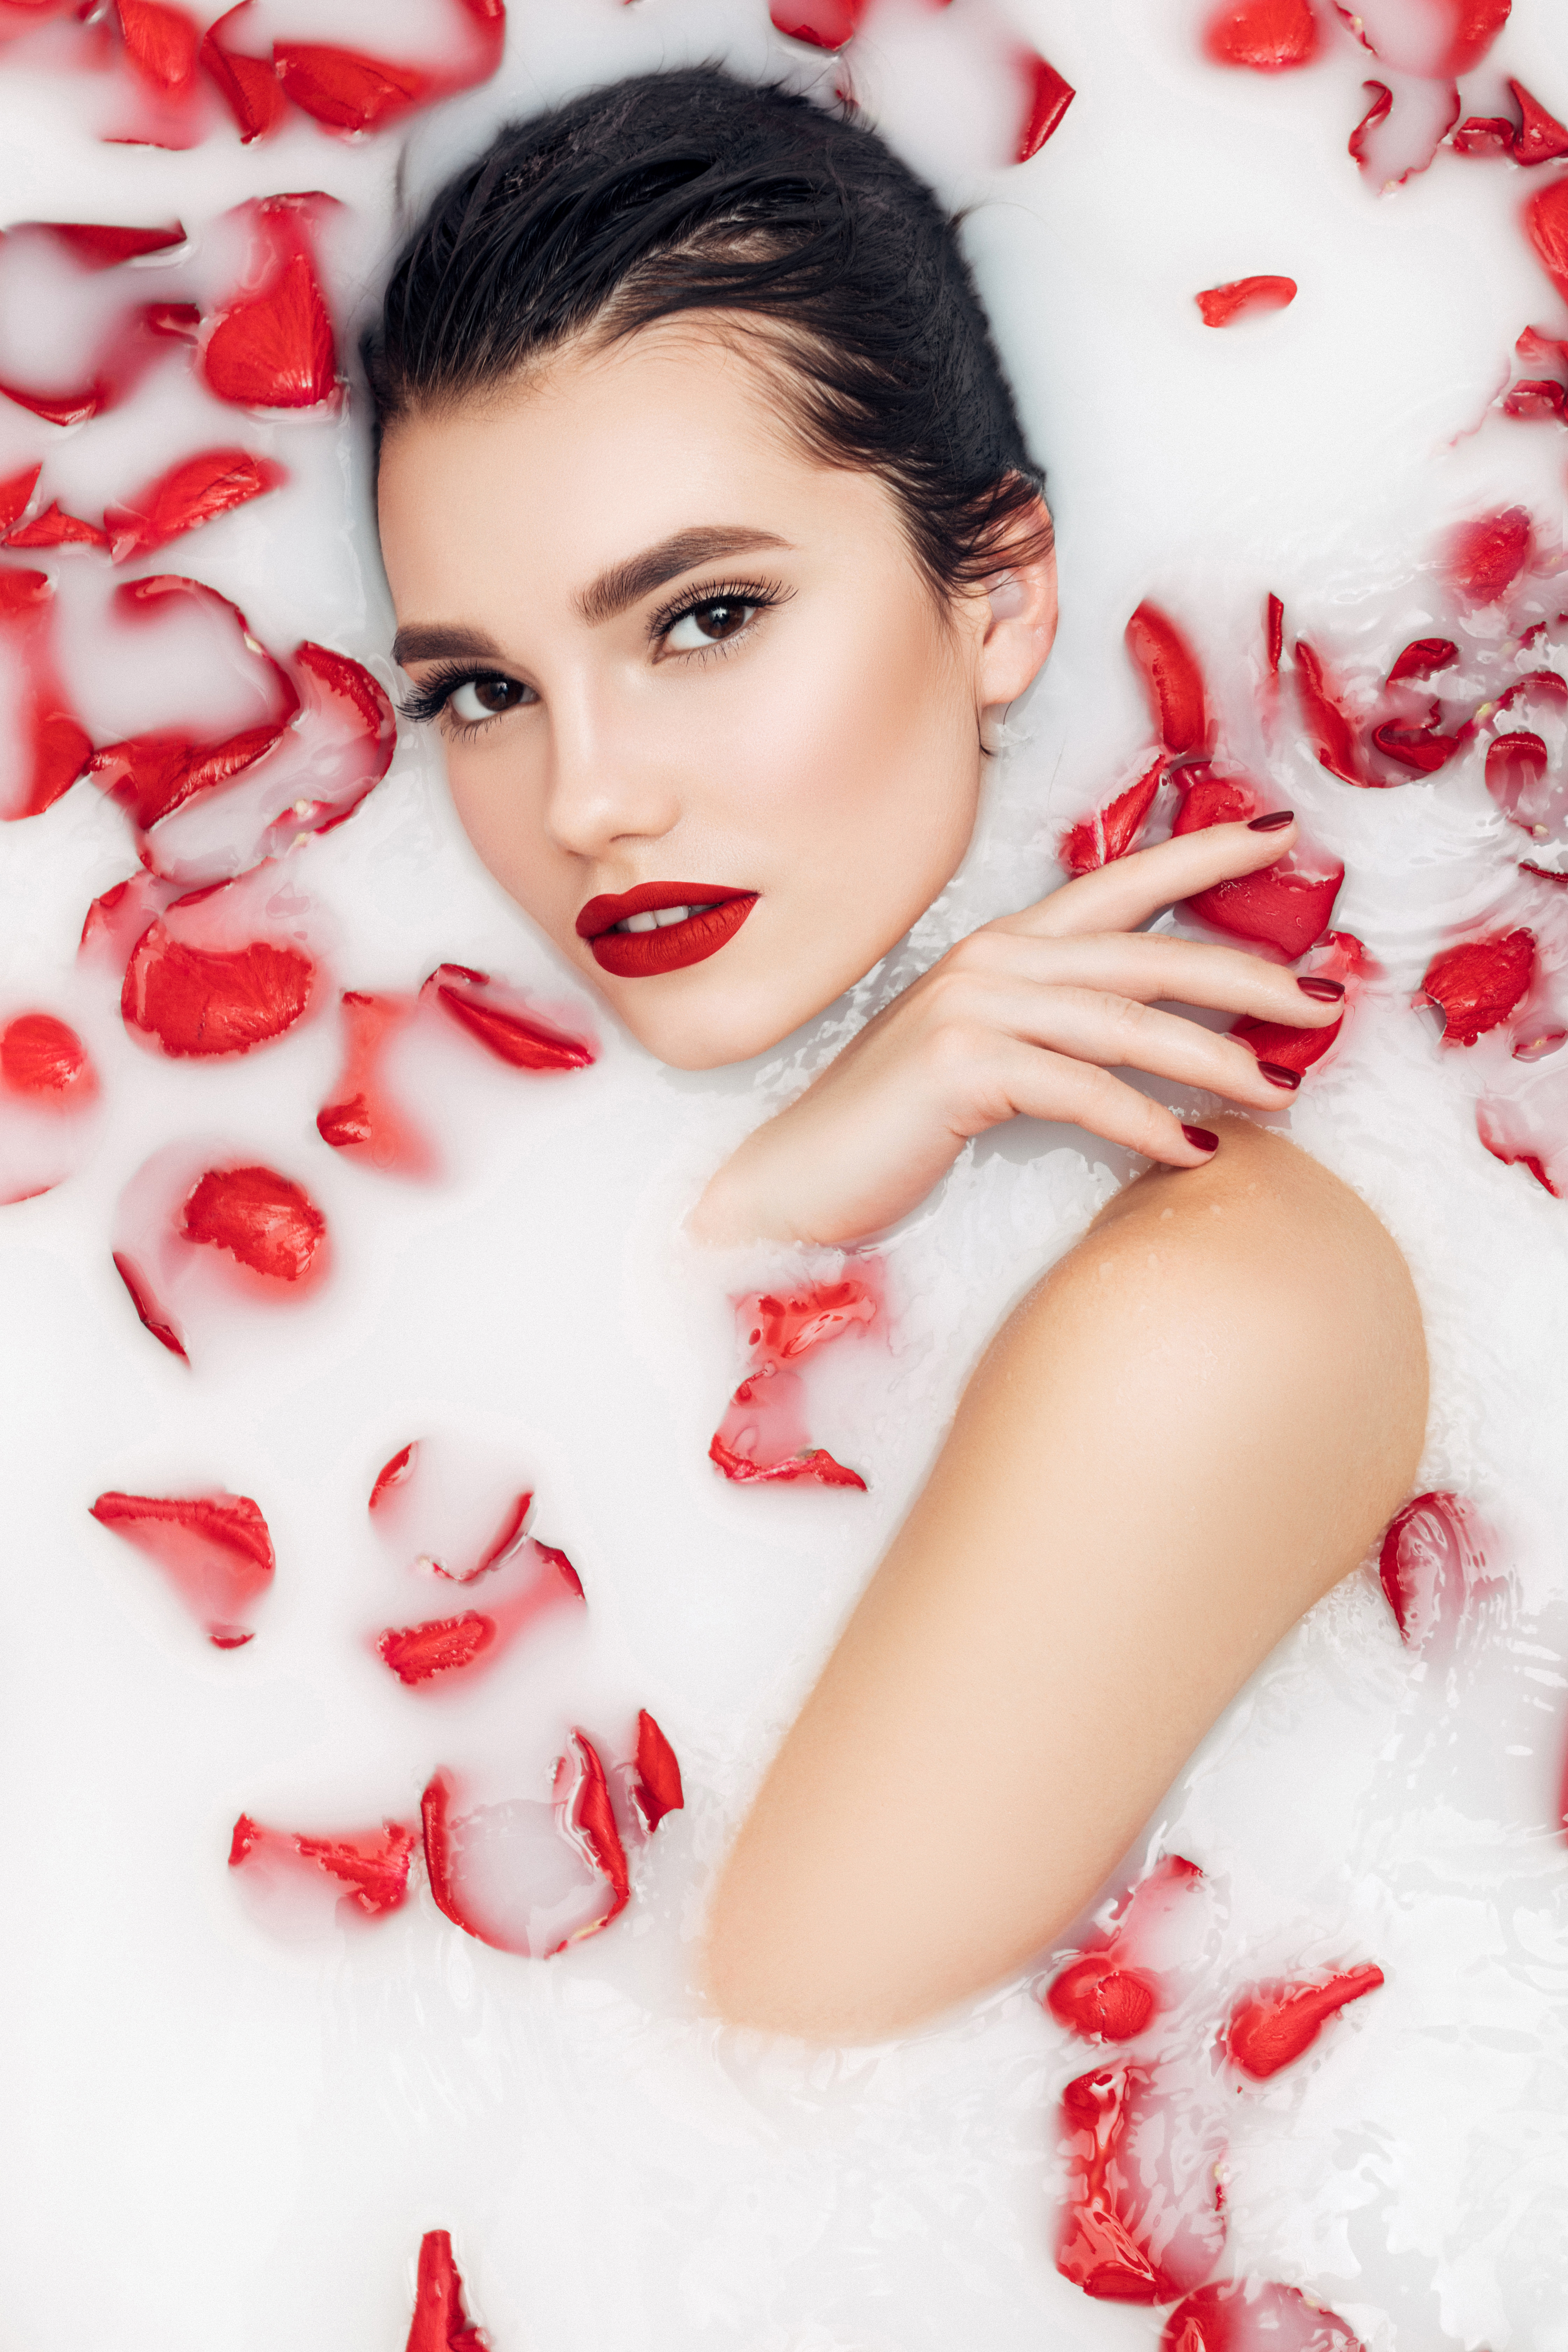 Фото в ванне с молоком и розами